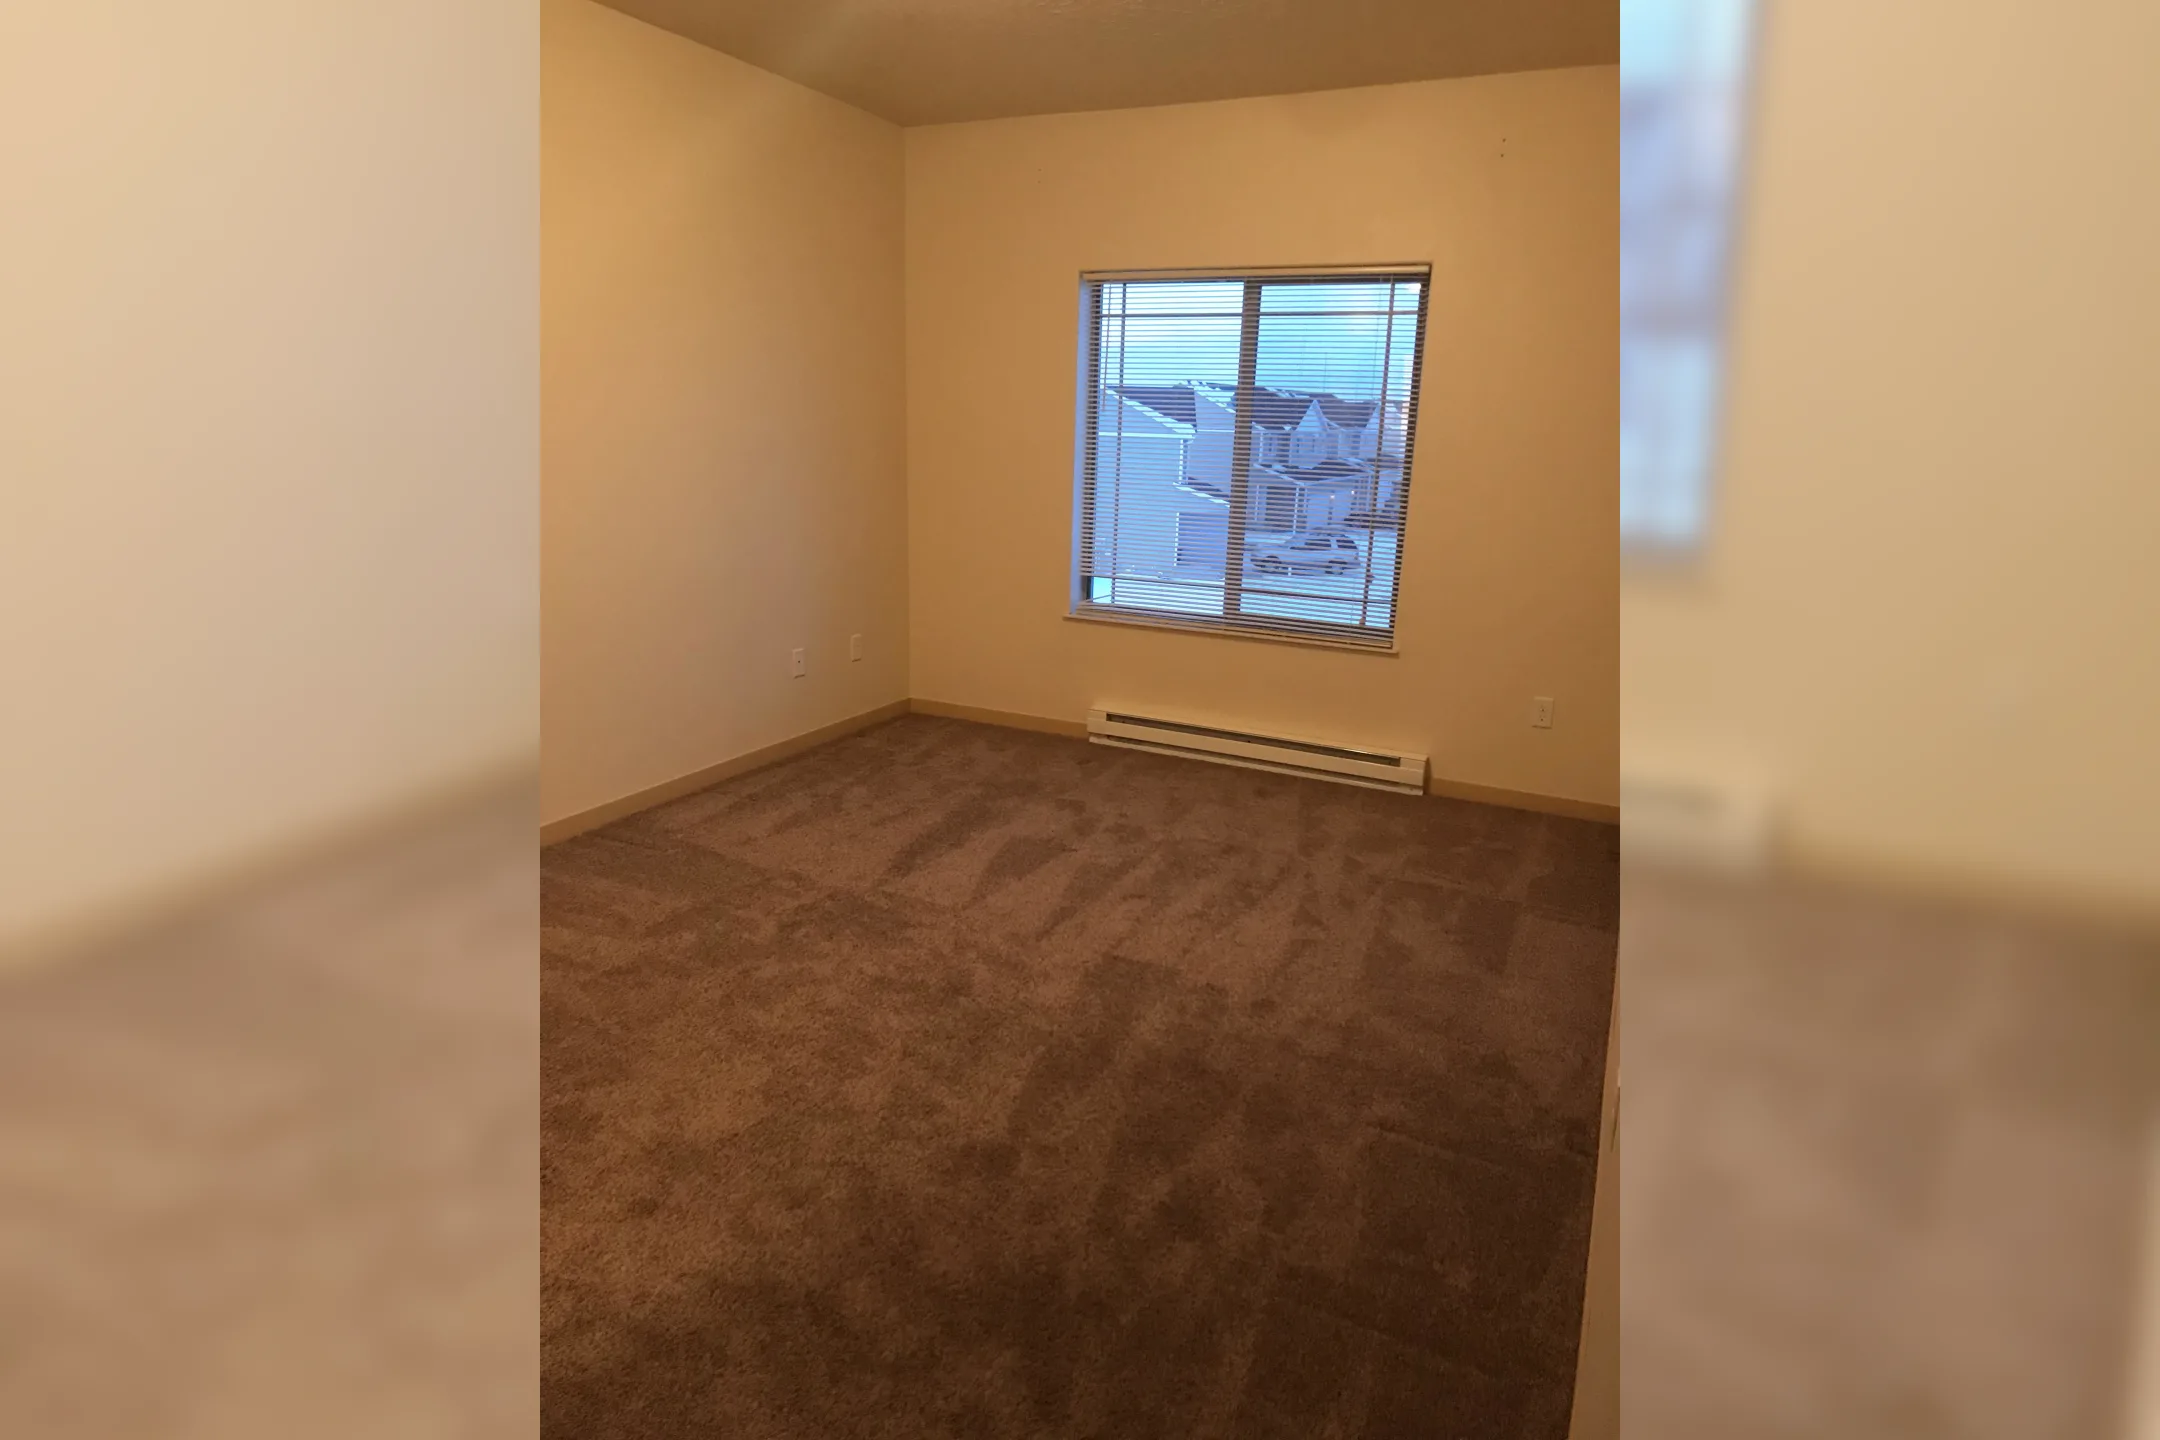 Bedroom - Aspen Ponds Apartments - Fargo, ND